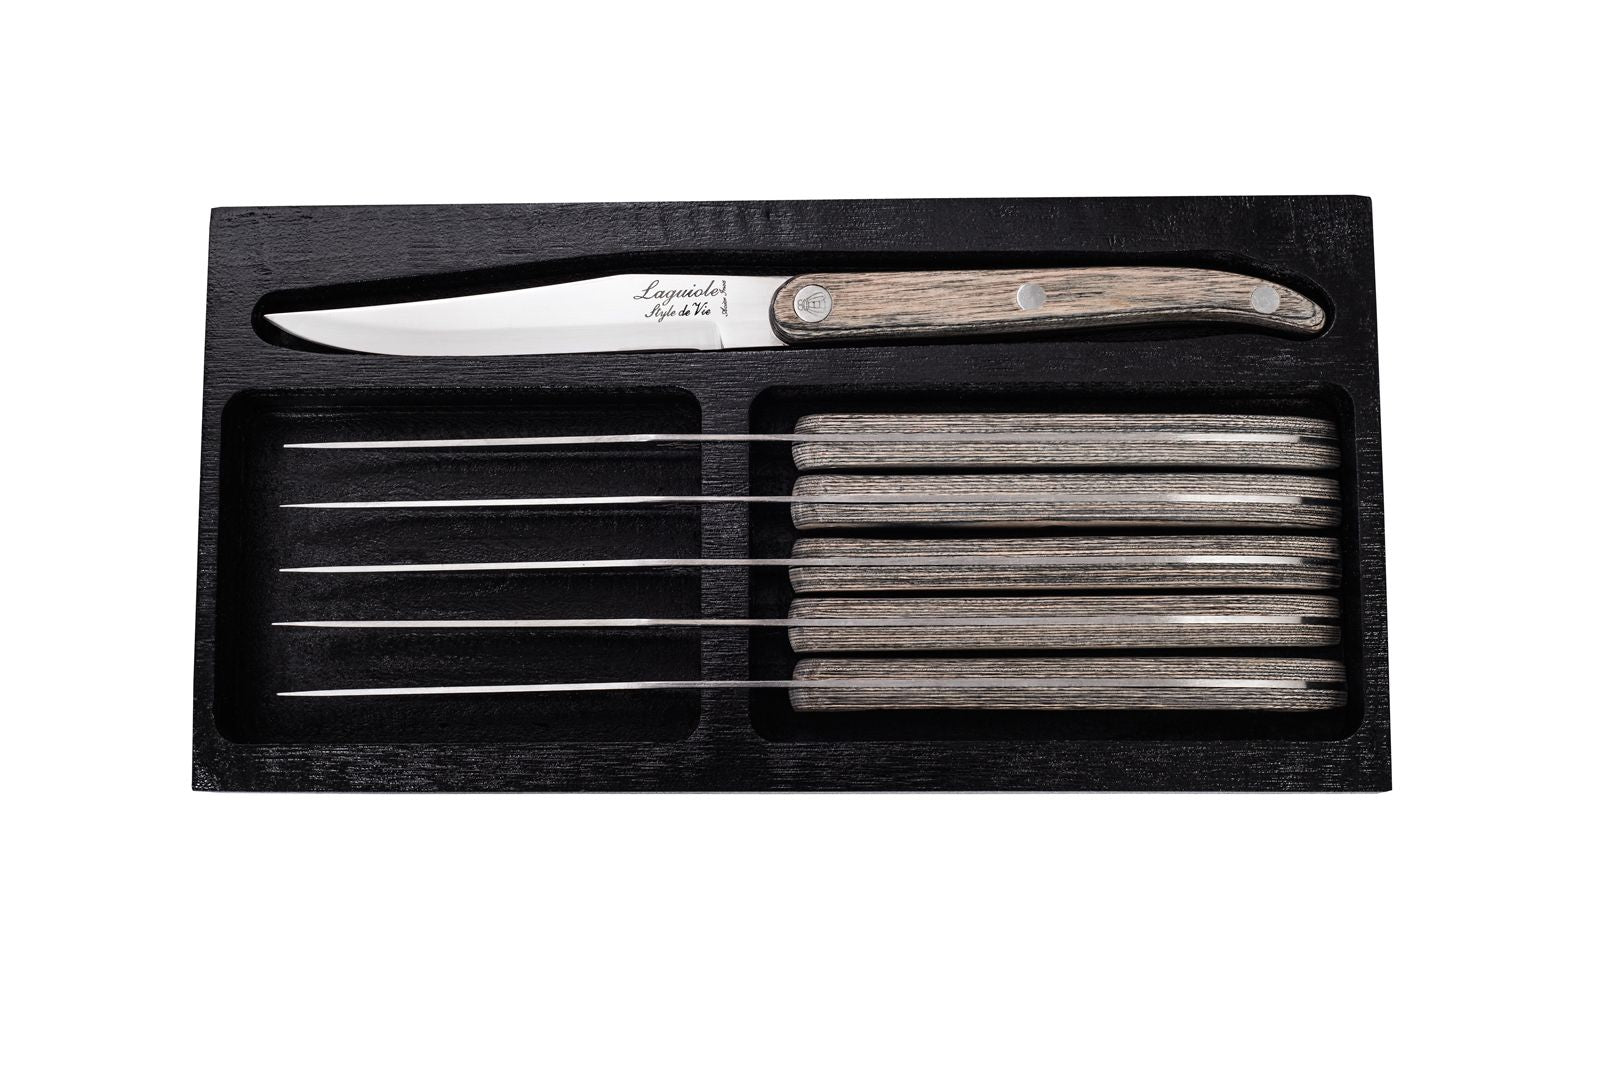 Style De Vie Authentique Laguiole Innovation Line Bøfknive 6-delt sæt, Grå Pakka med glat klinge